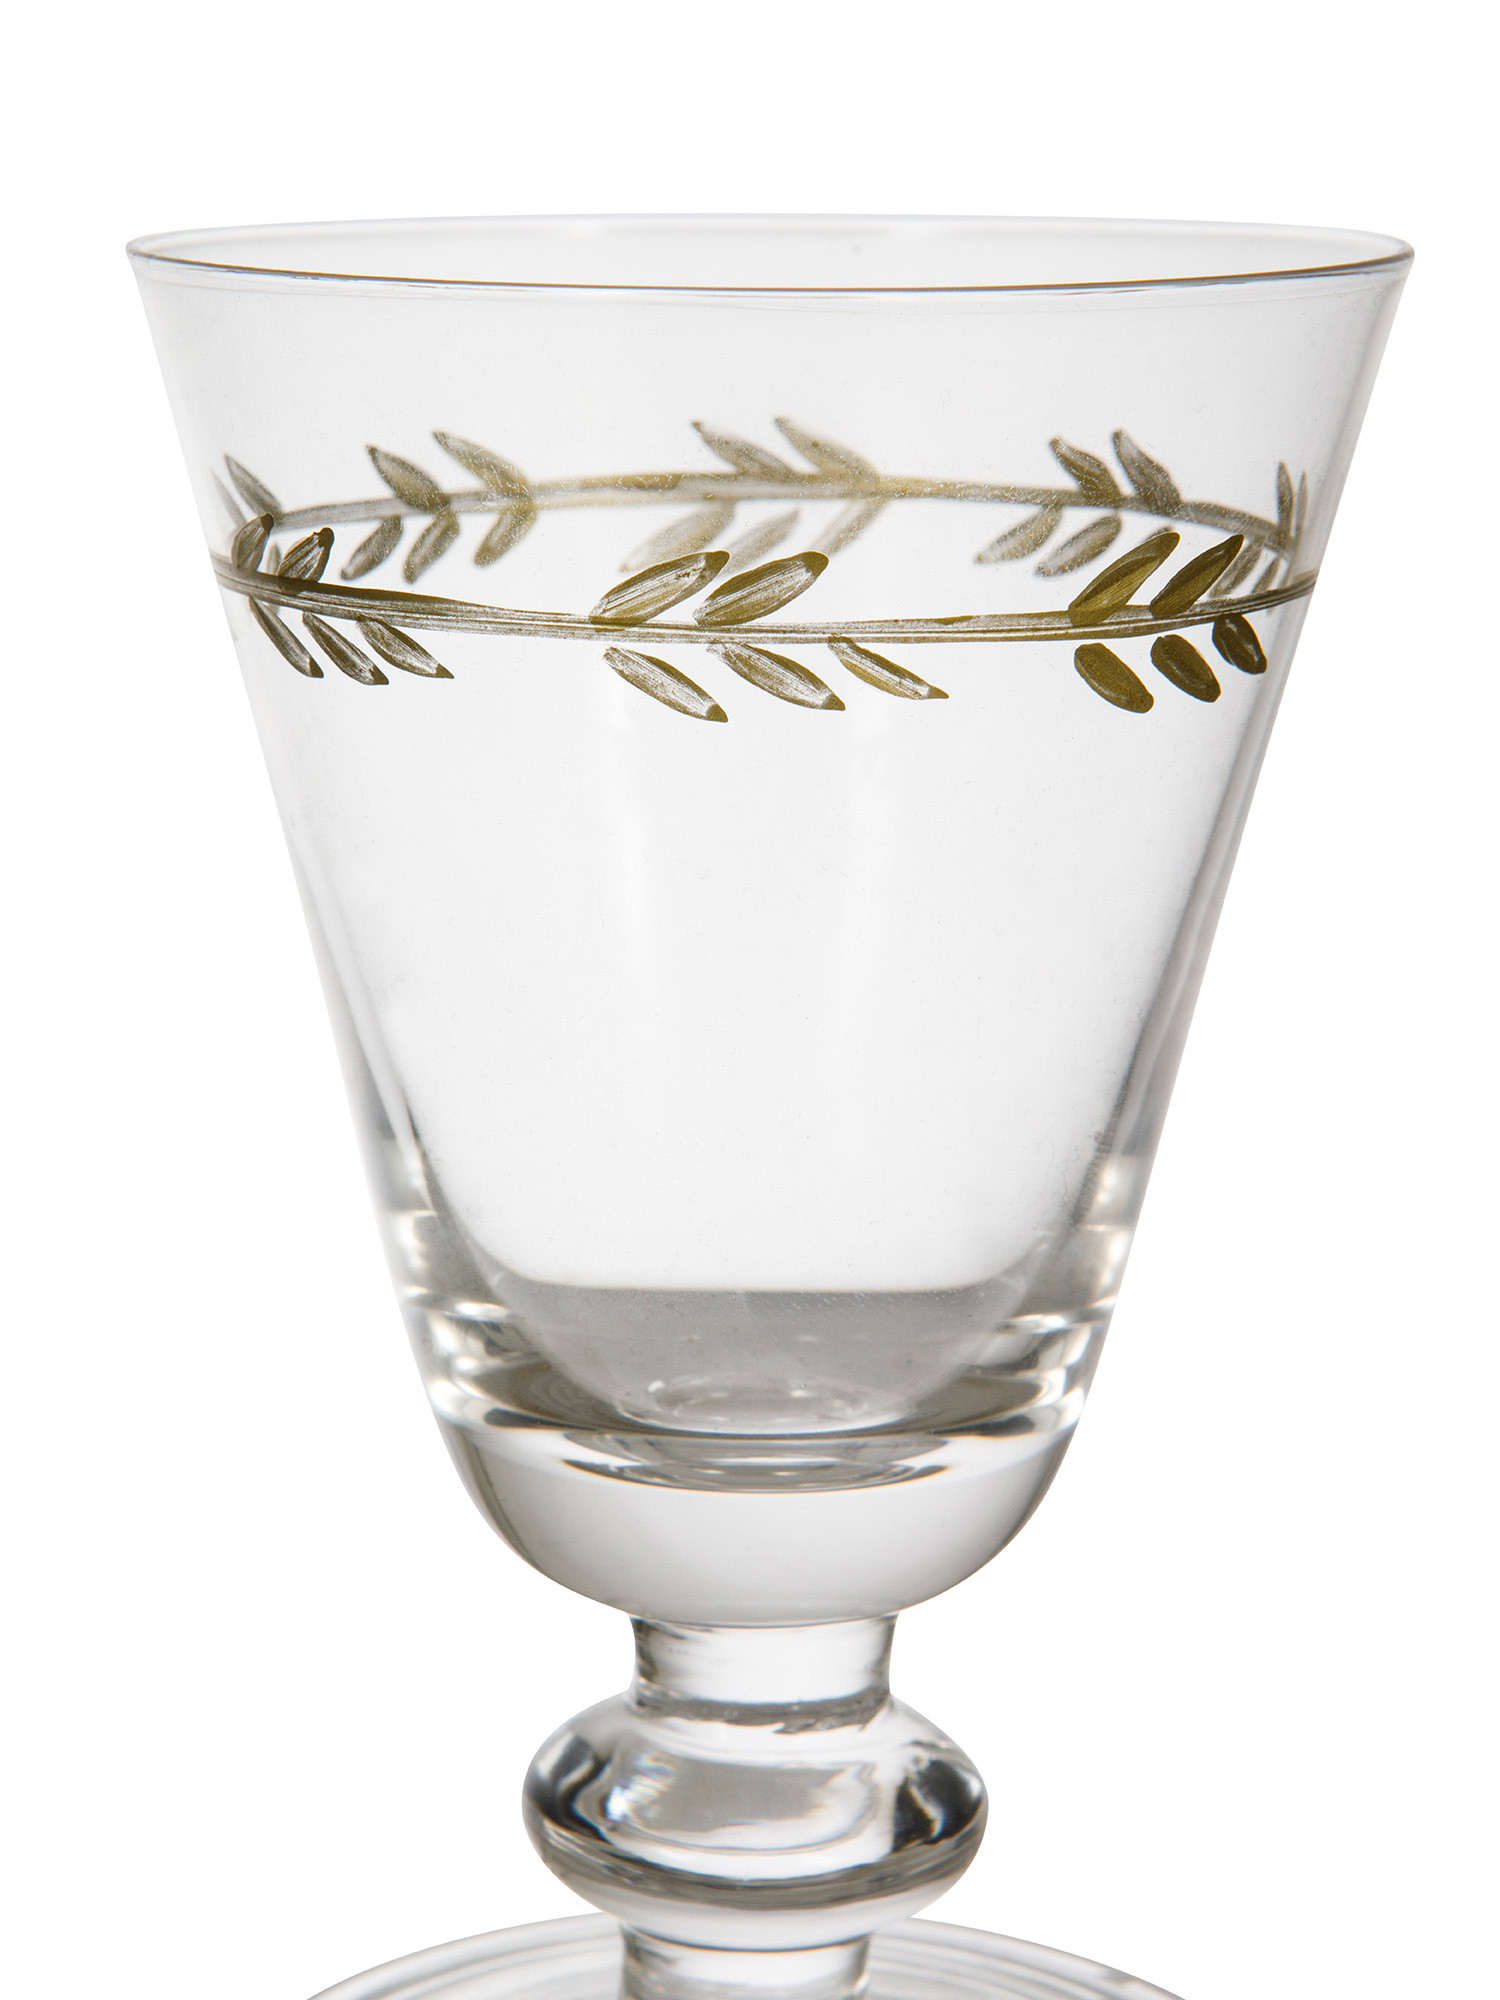 Glass goblet with leaves decoration, Transparent, large image number 1